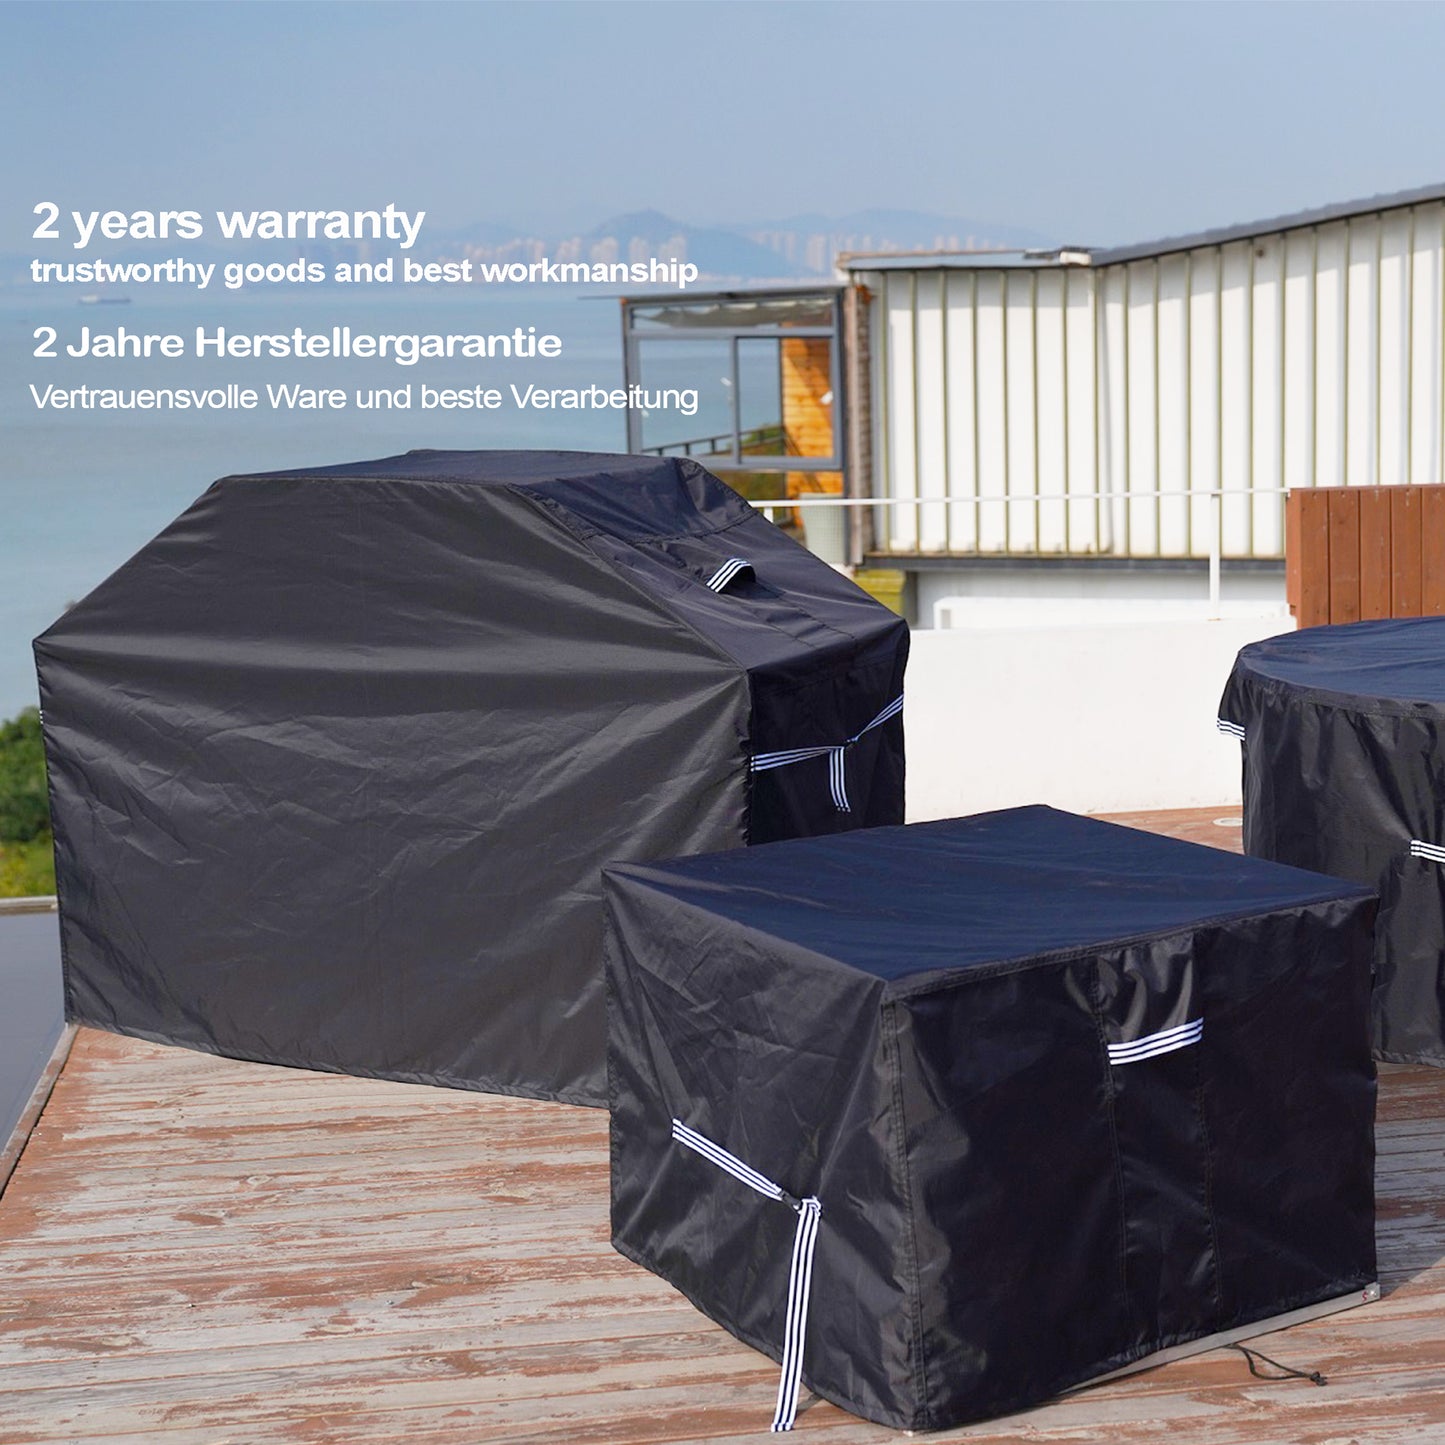 Black Premium Gartensitzgruppenhülle Ø  160x85cm / garden dining set cover /  atmungsaktiv / breathable